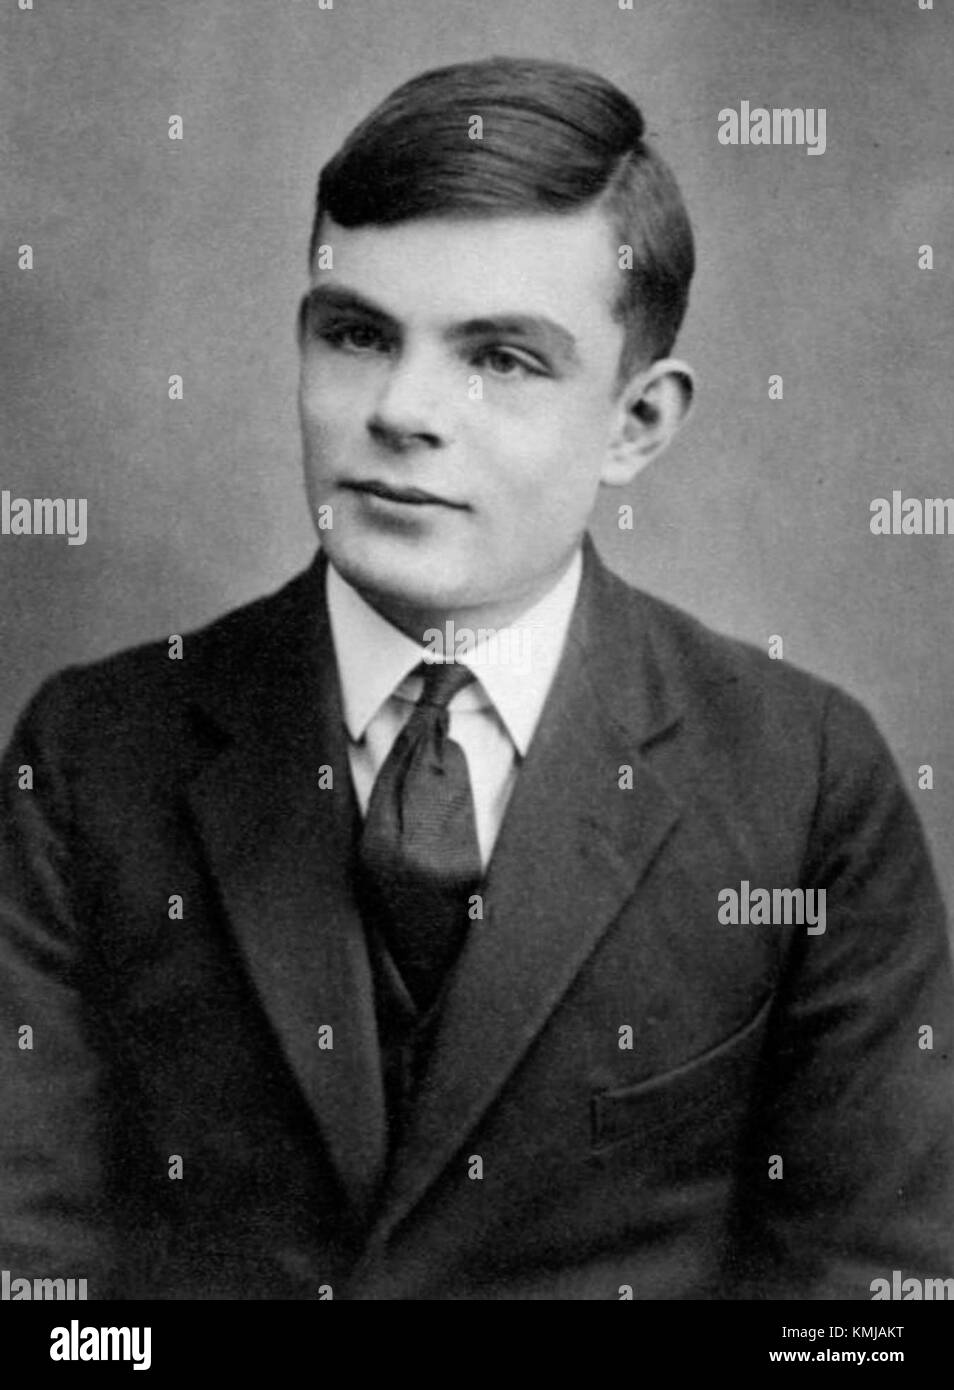 Alan Turing Aged 16 Stock Photo